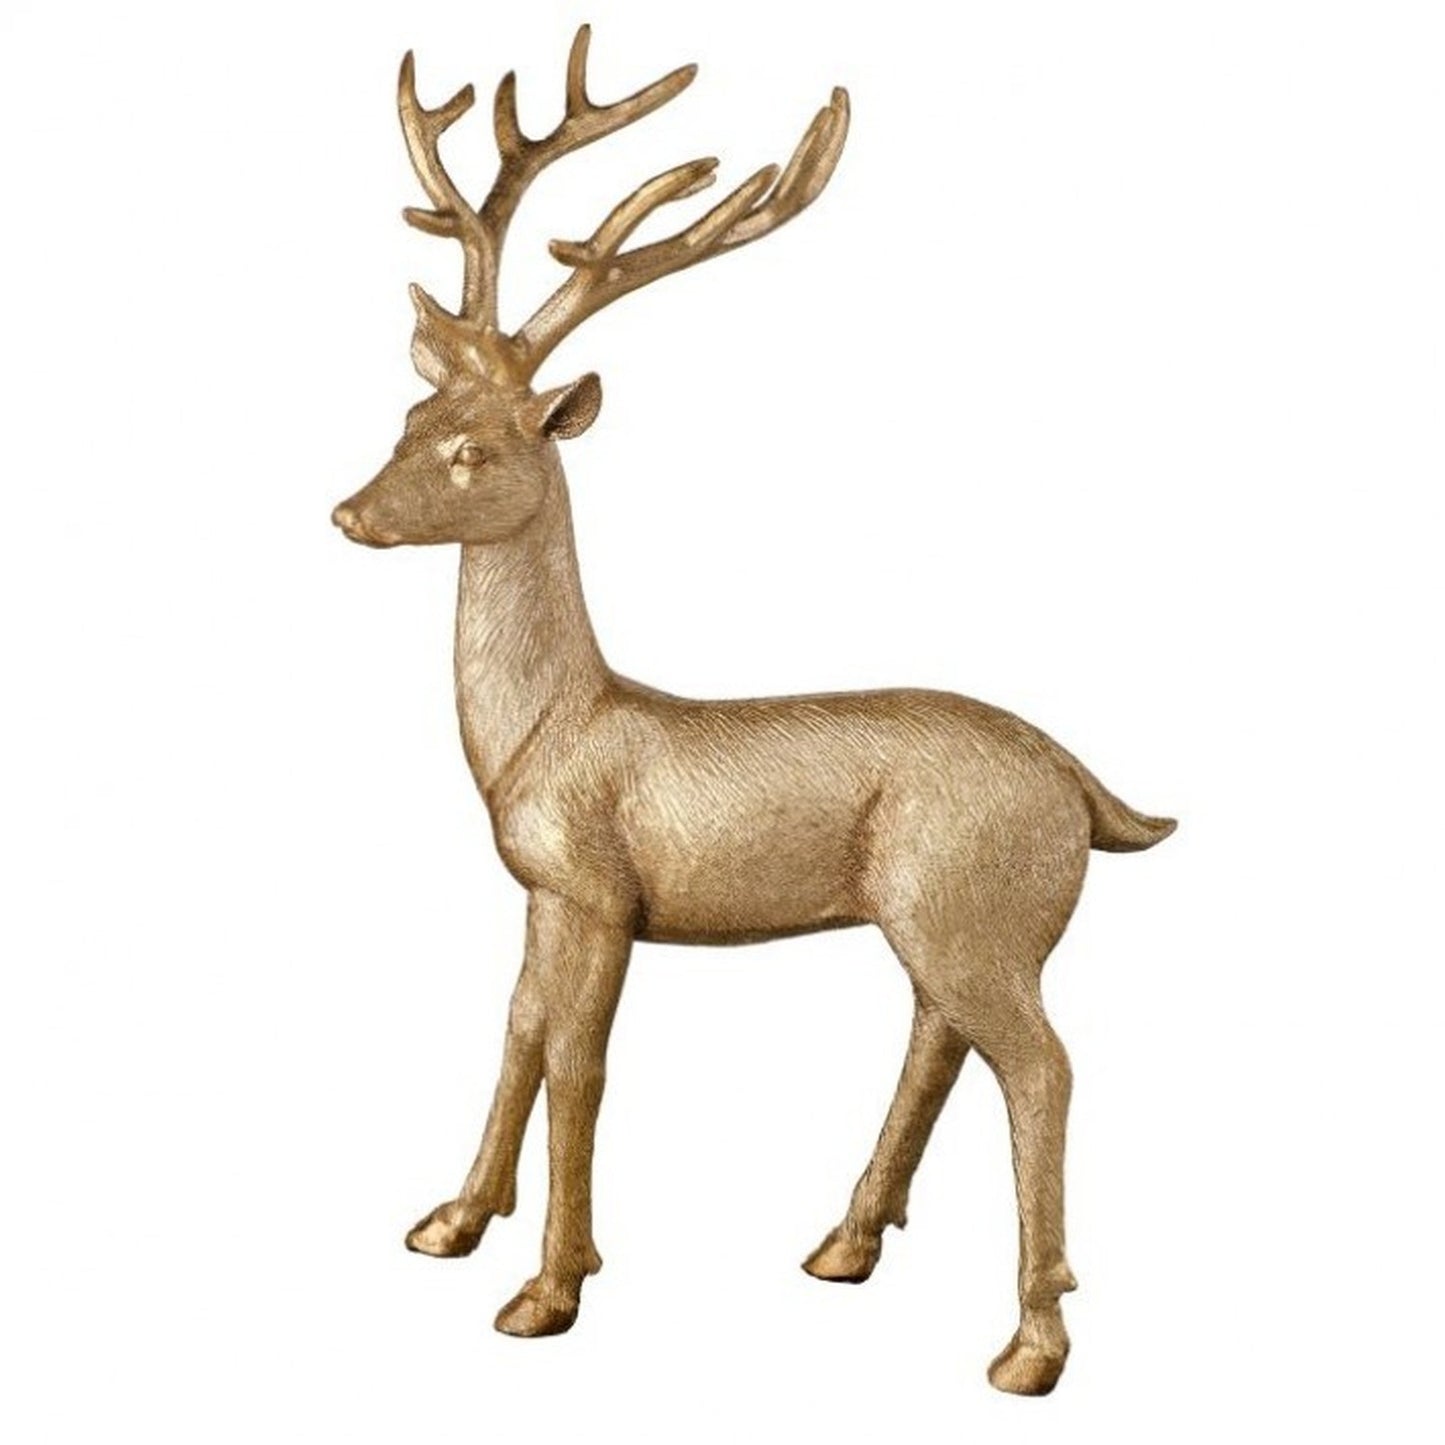 Regency International 15" Resin Long Horn Standing Deer